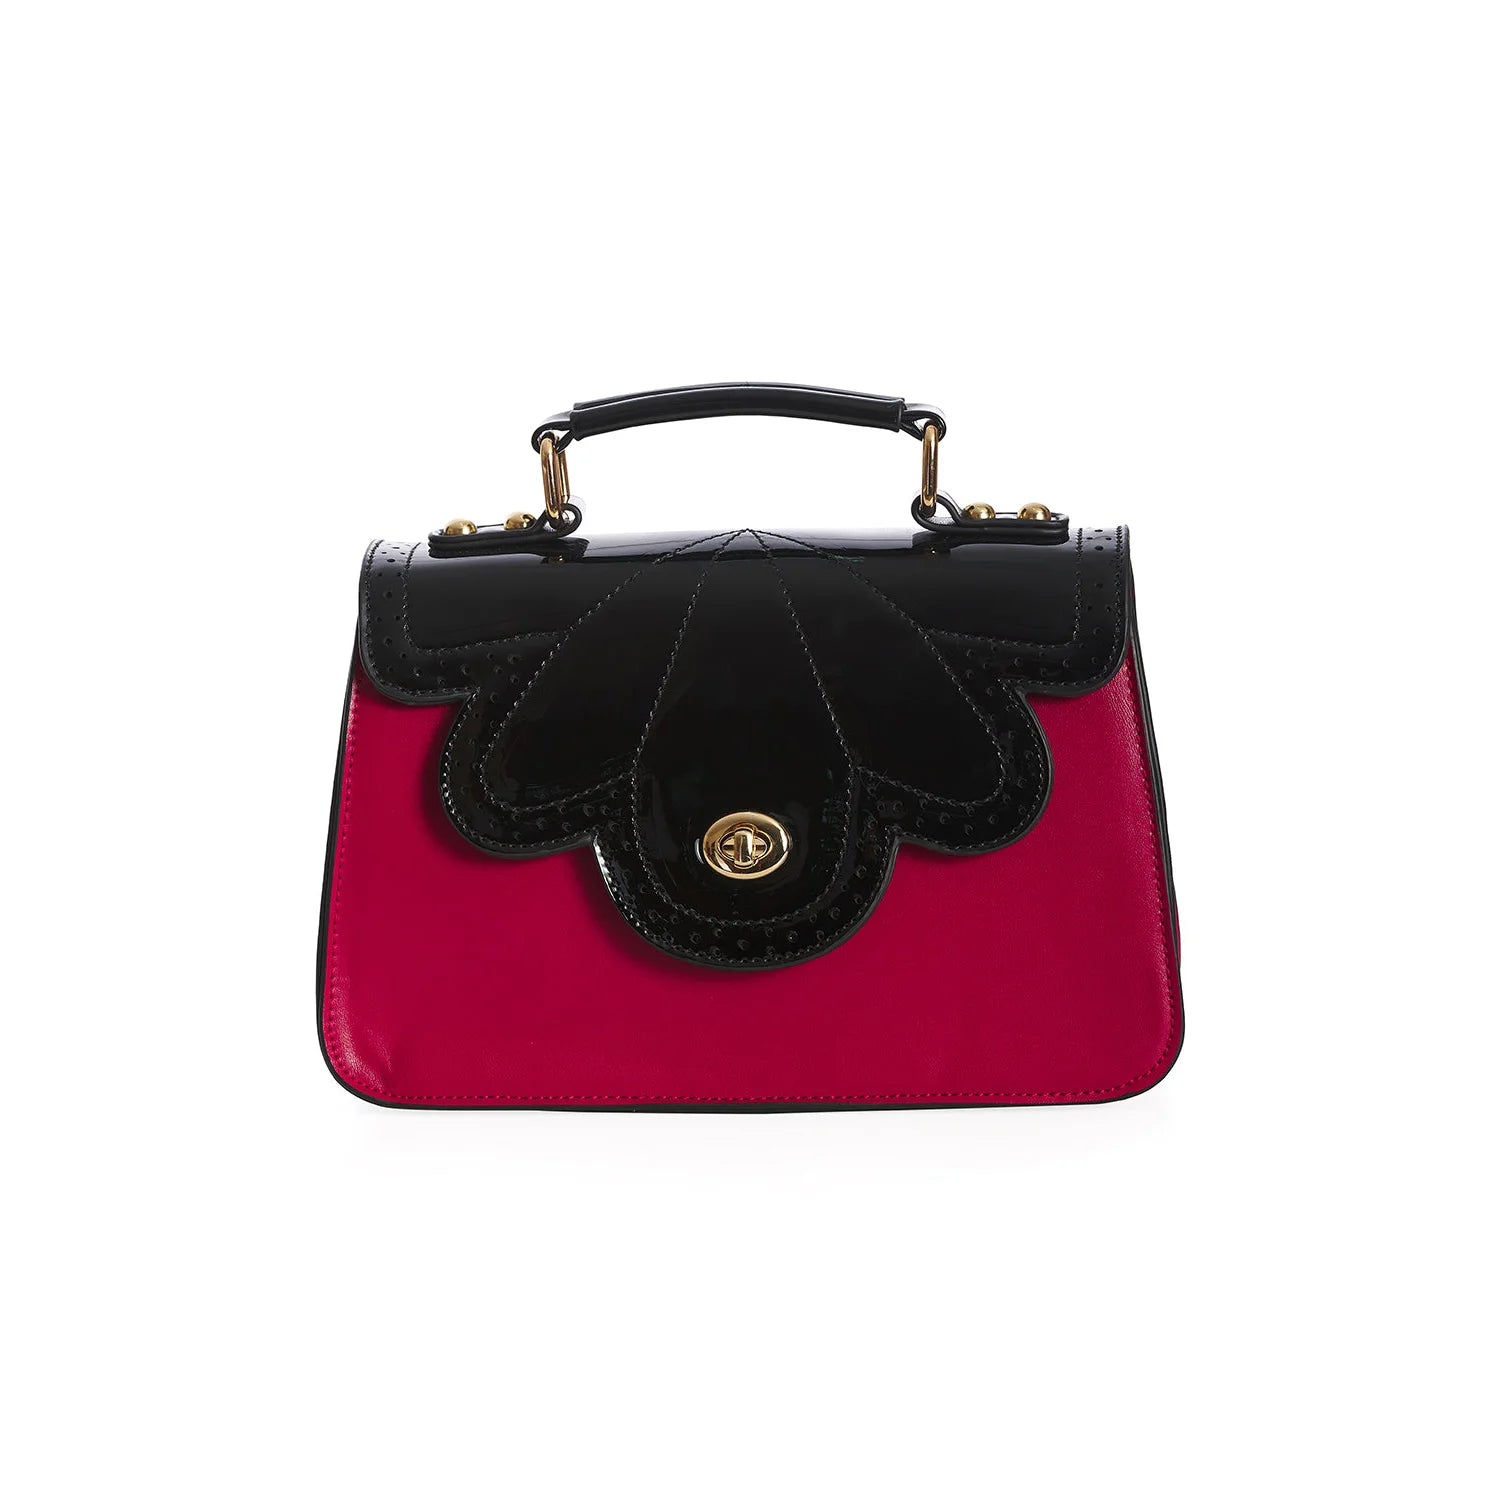 Red And Black Scalloped Handbag